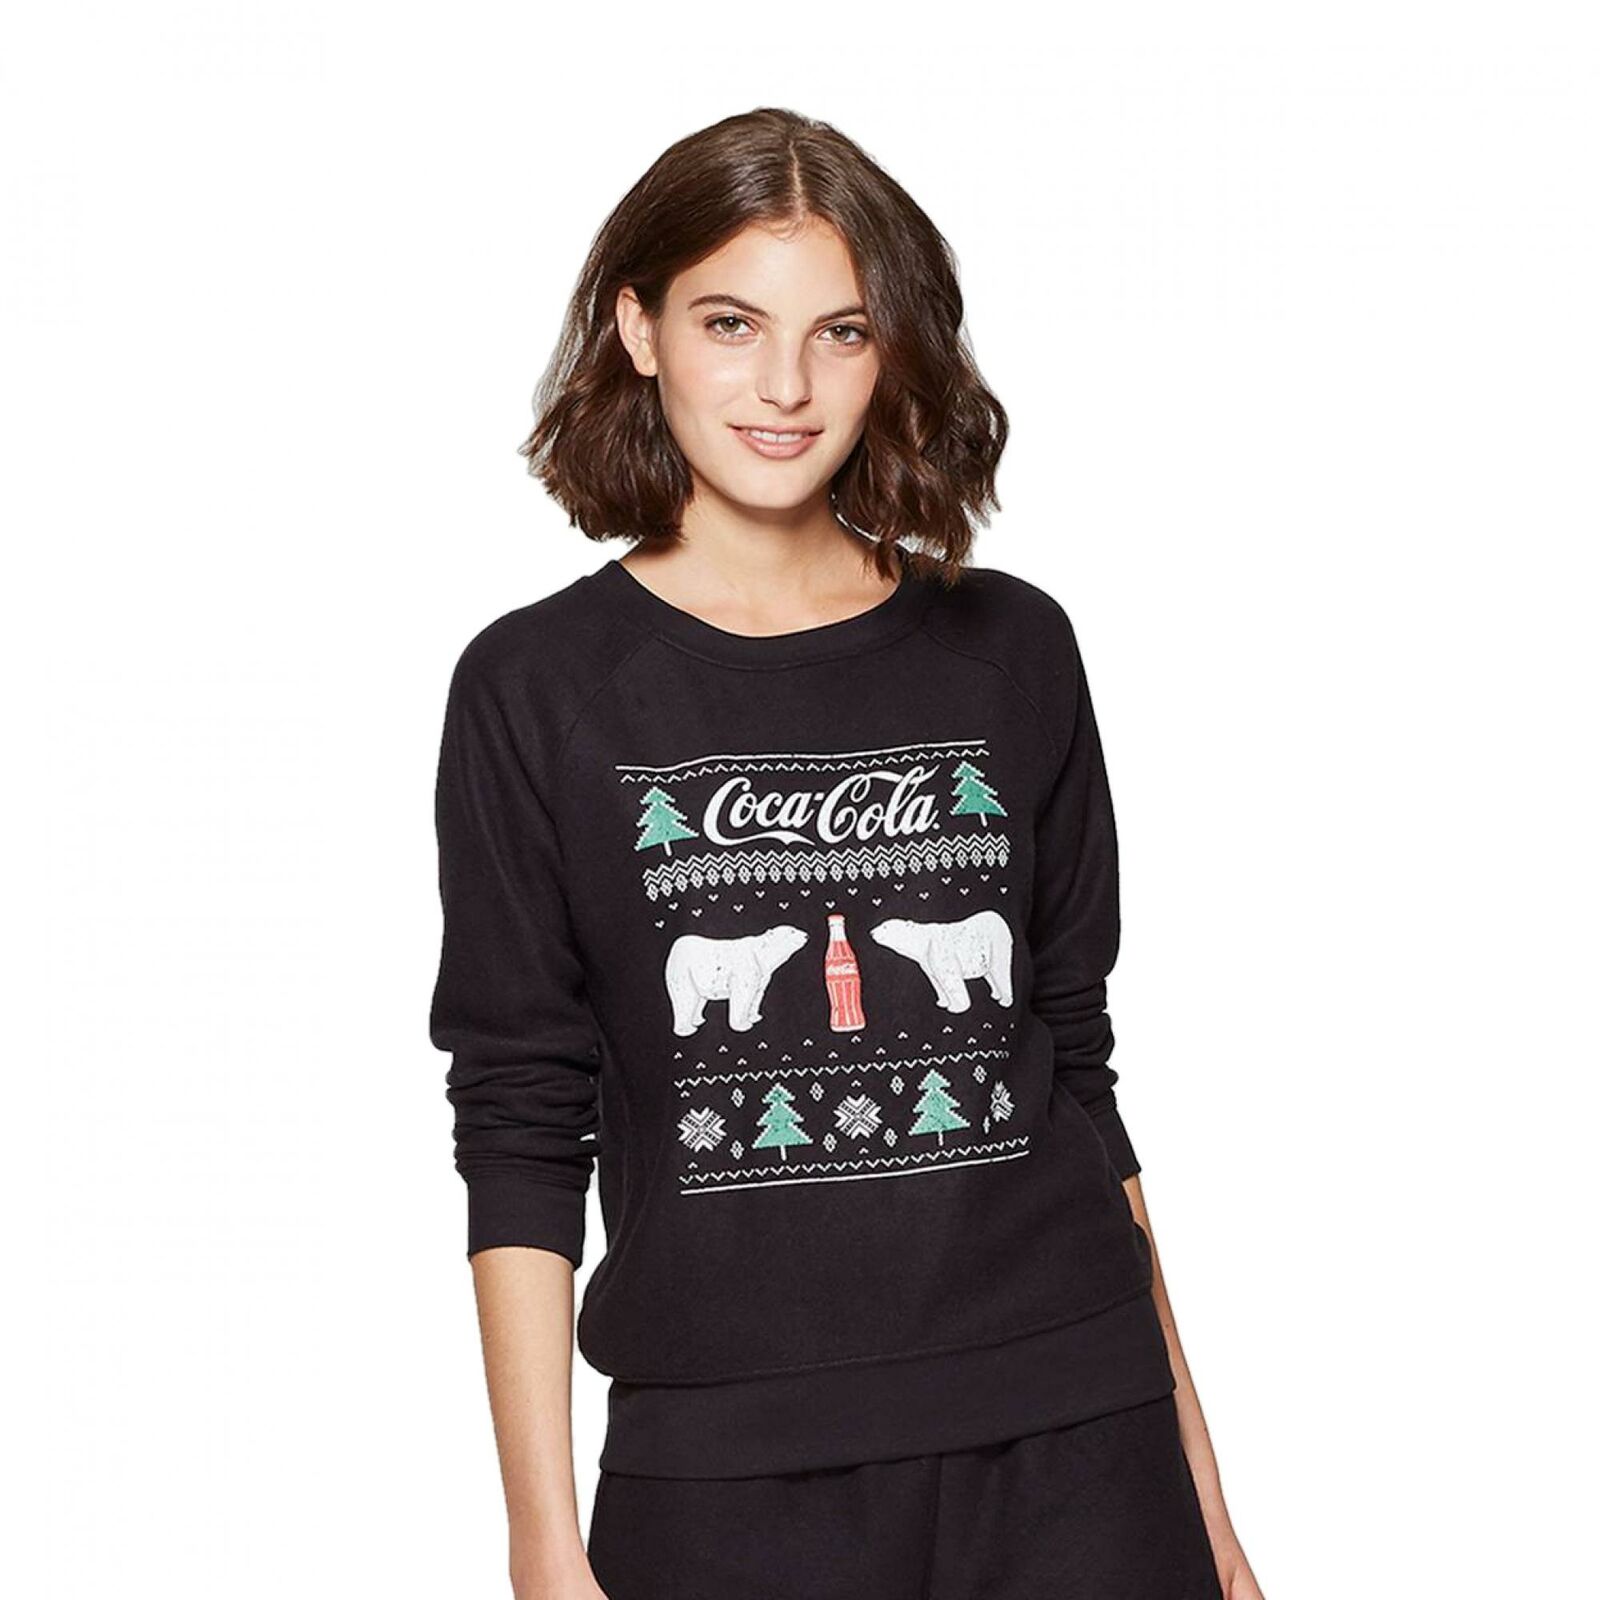 Grayson/Threads Grayson Threads Women's Coca Cola Pajama Sleep Sweatshirt Top